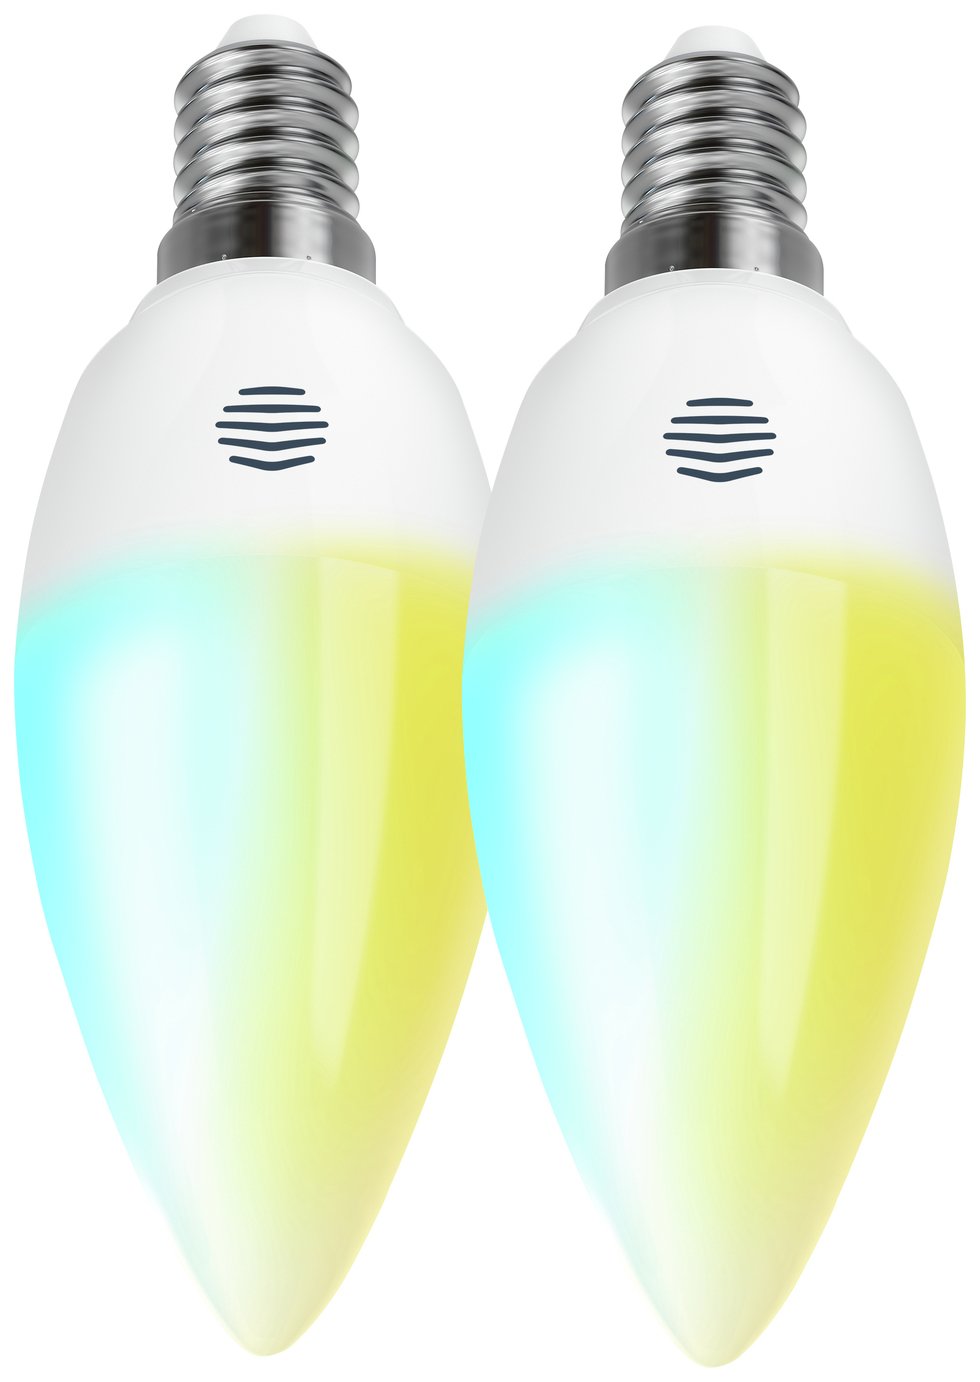 Hive Light Cool to Warm White Smart E14 Bulb - Double